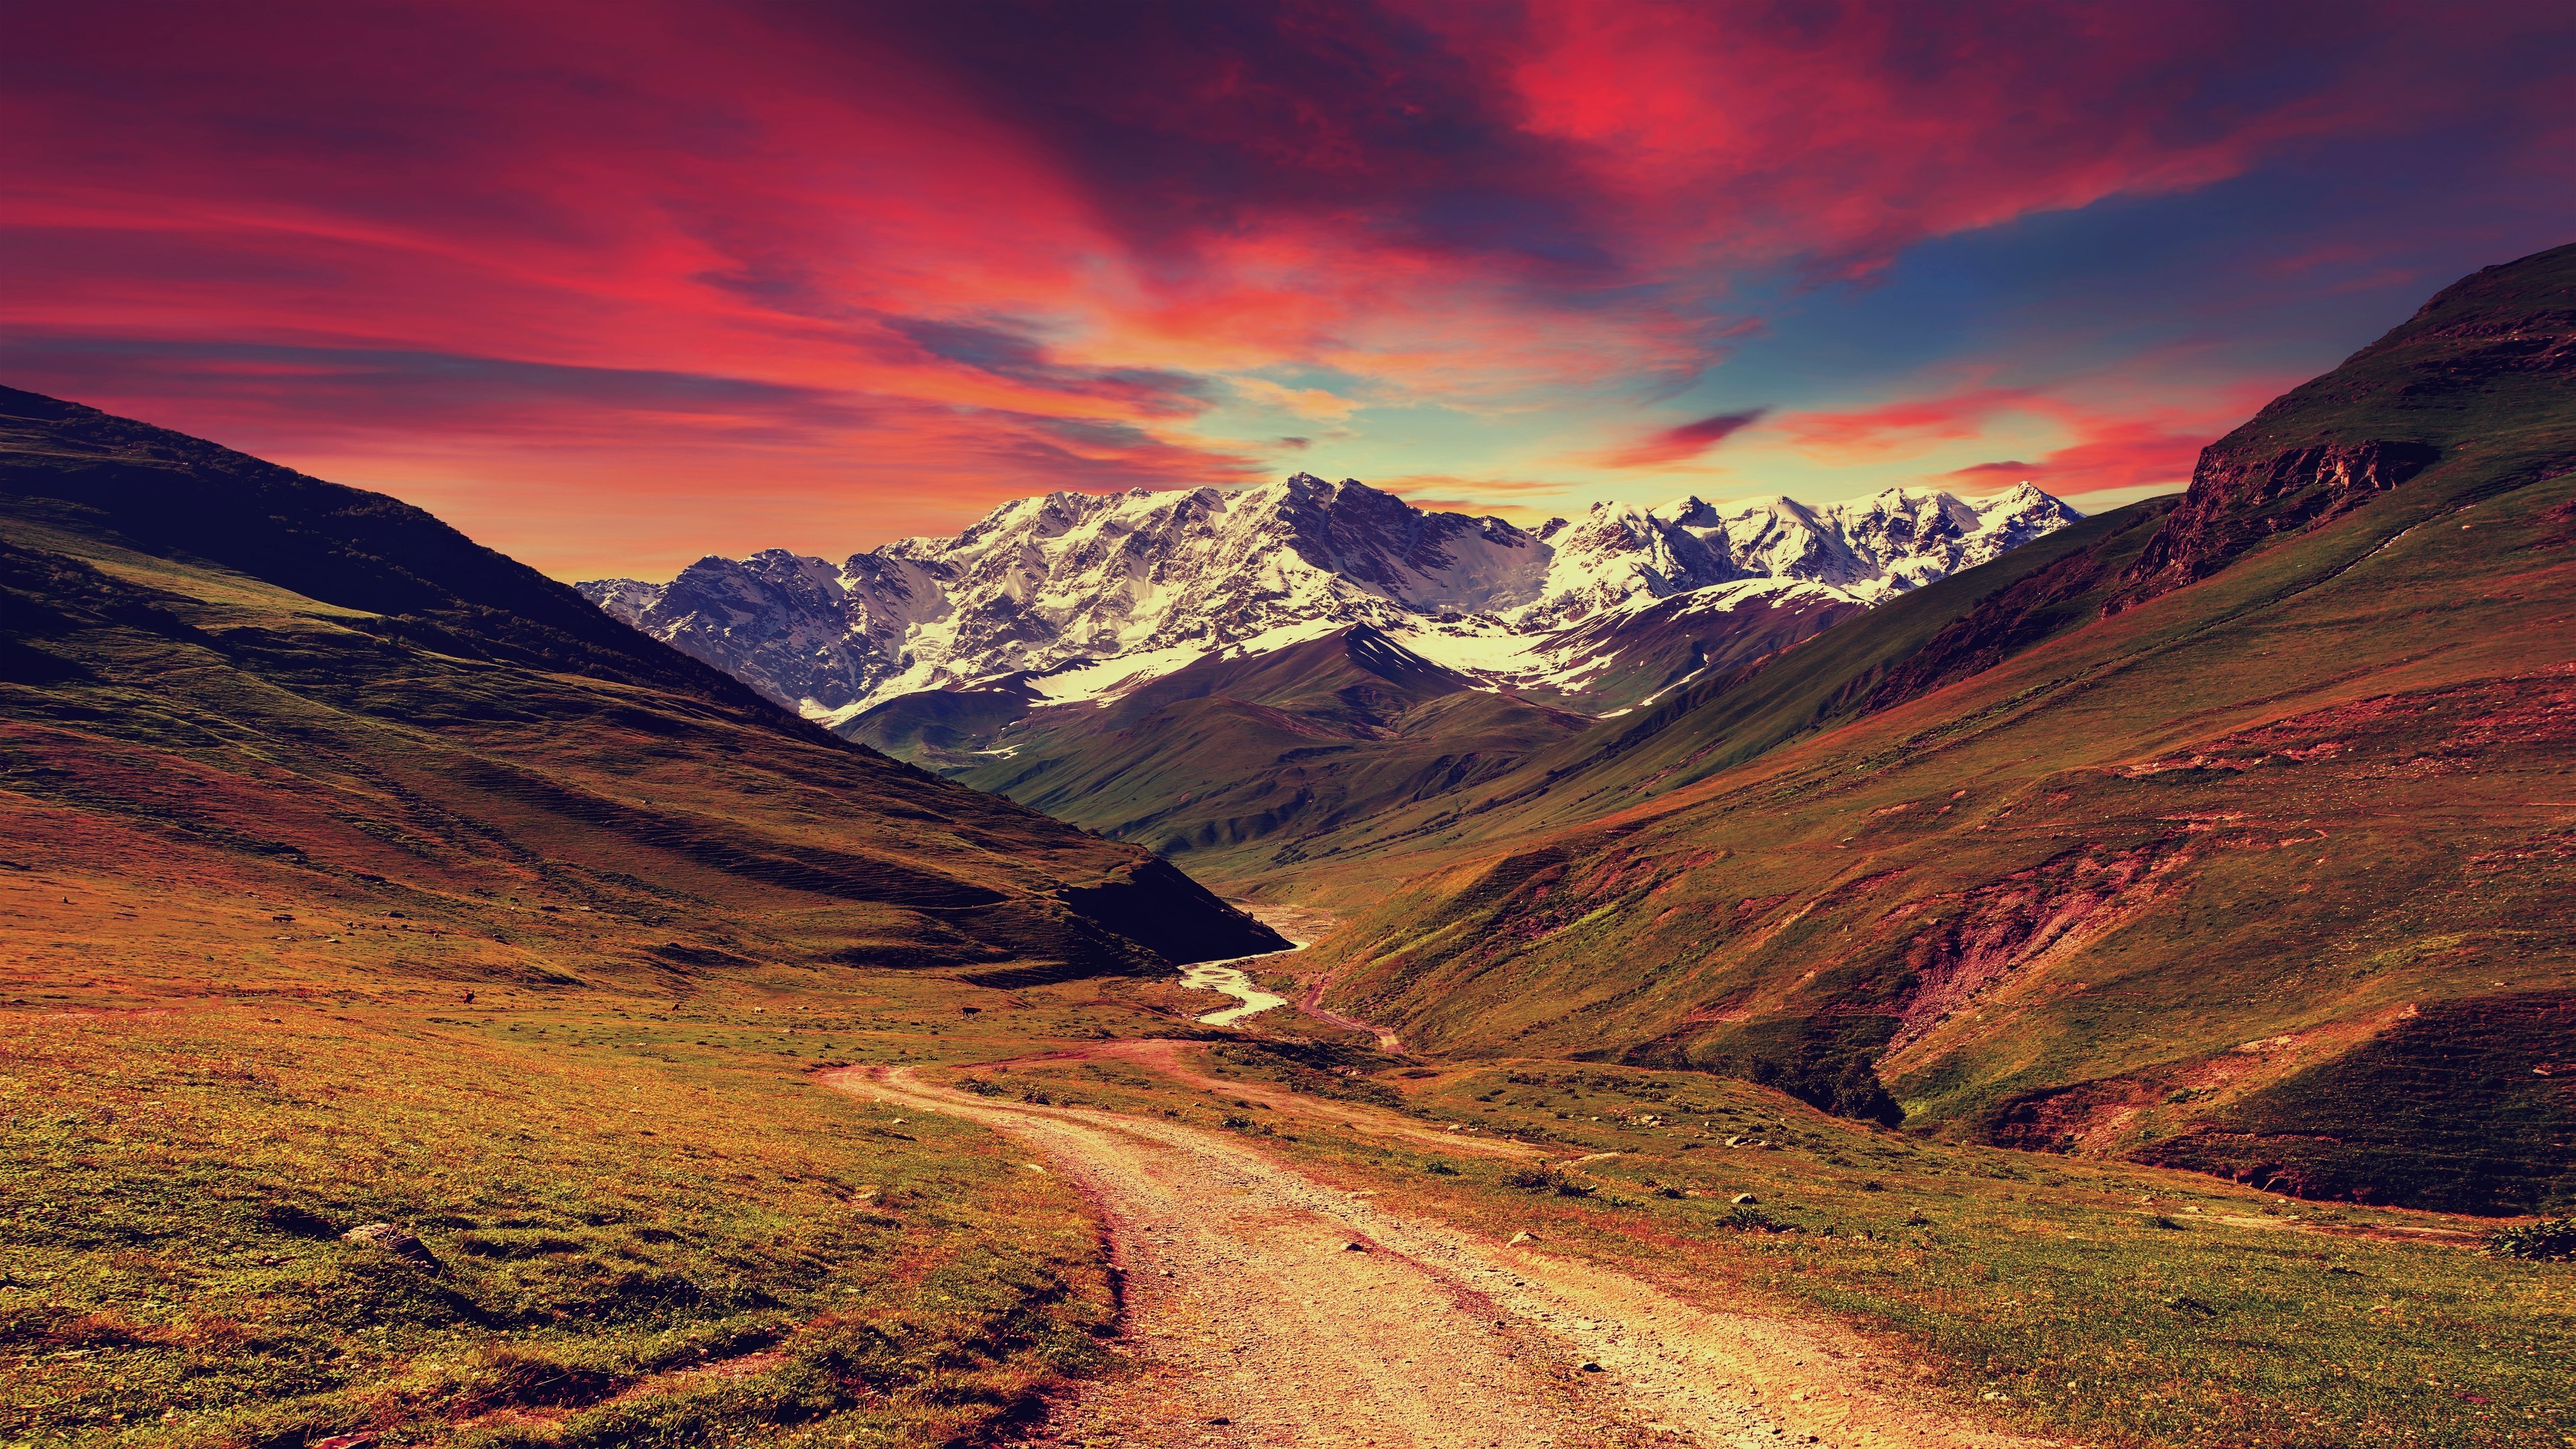 Download wallpaper 3840x2400 mountains, sunset, landscape 4k wallaper